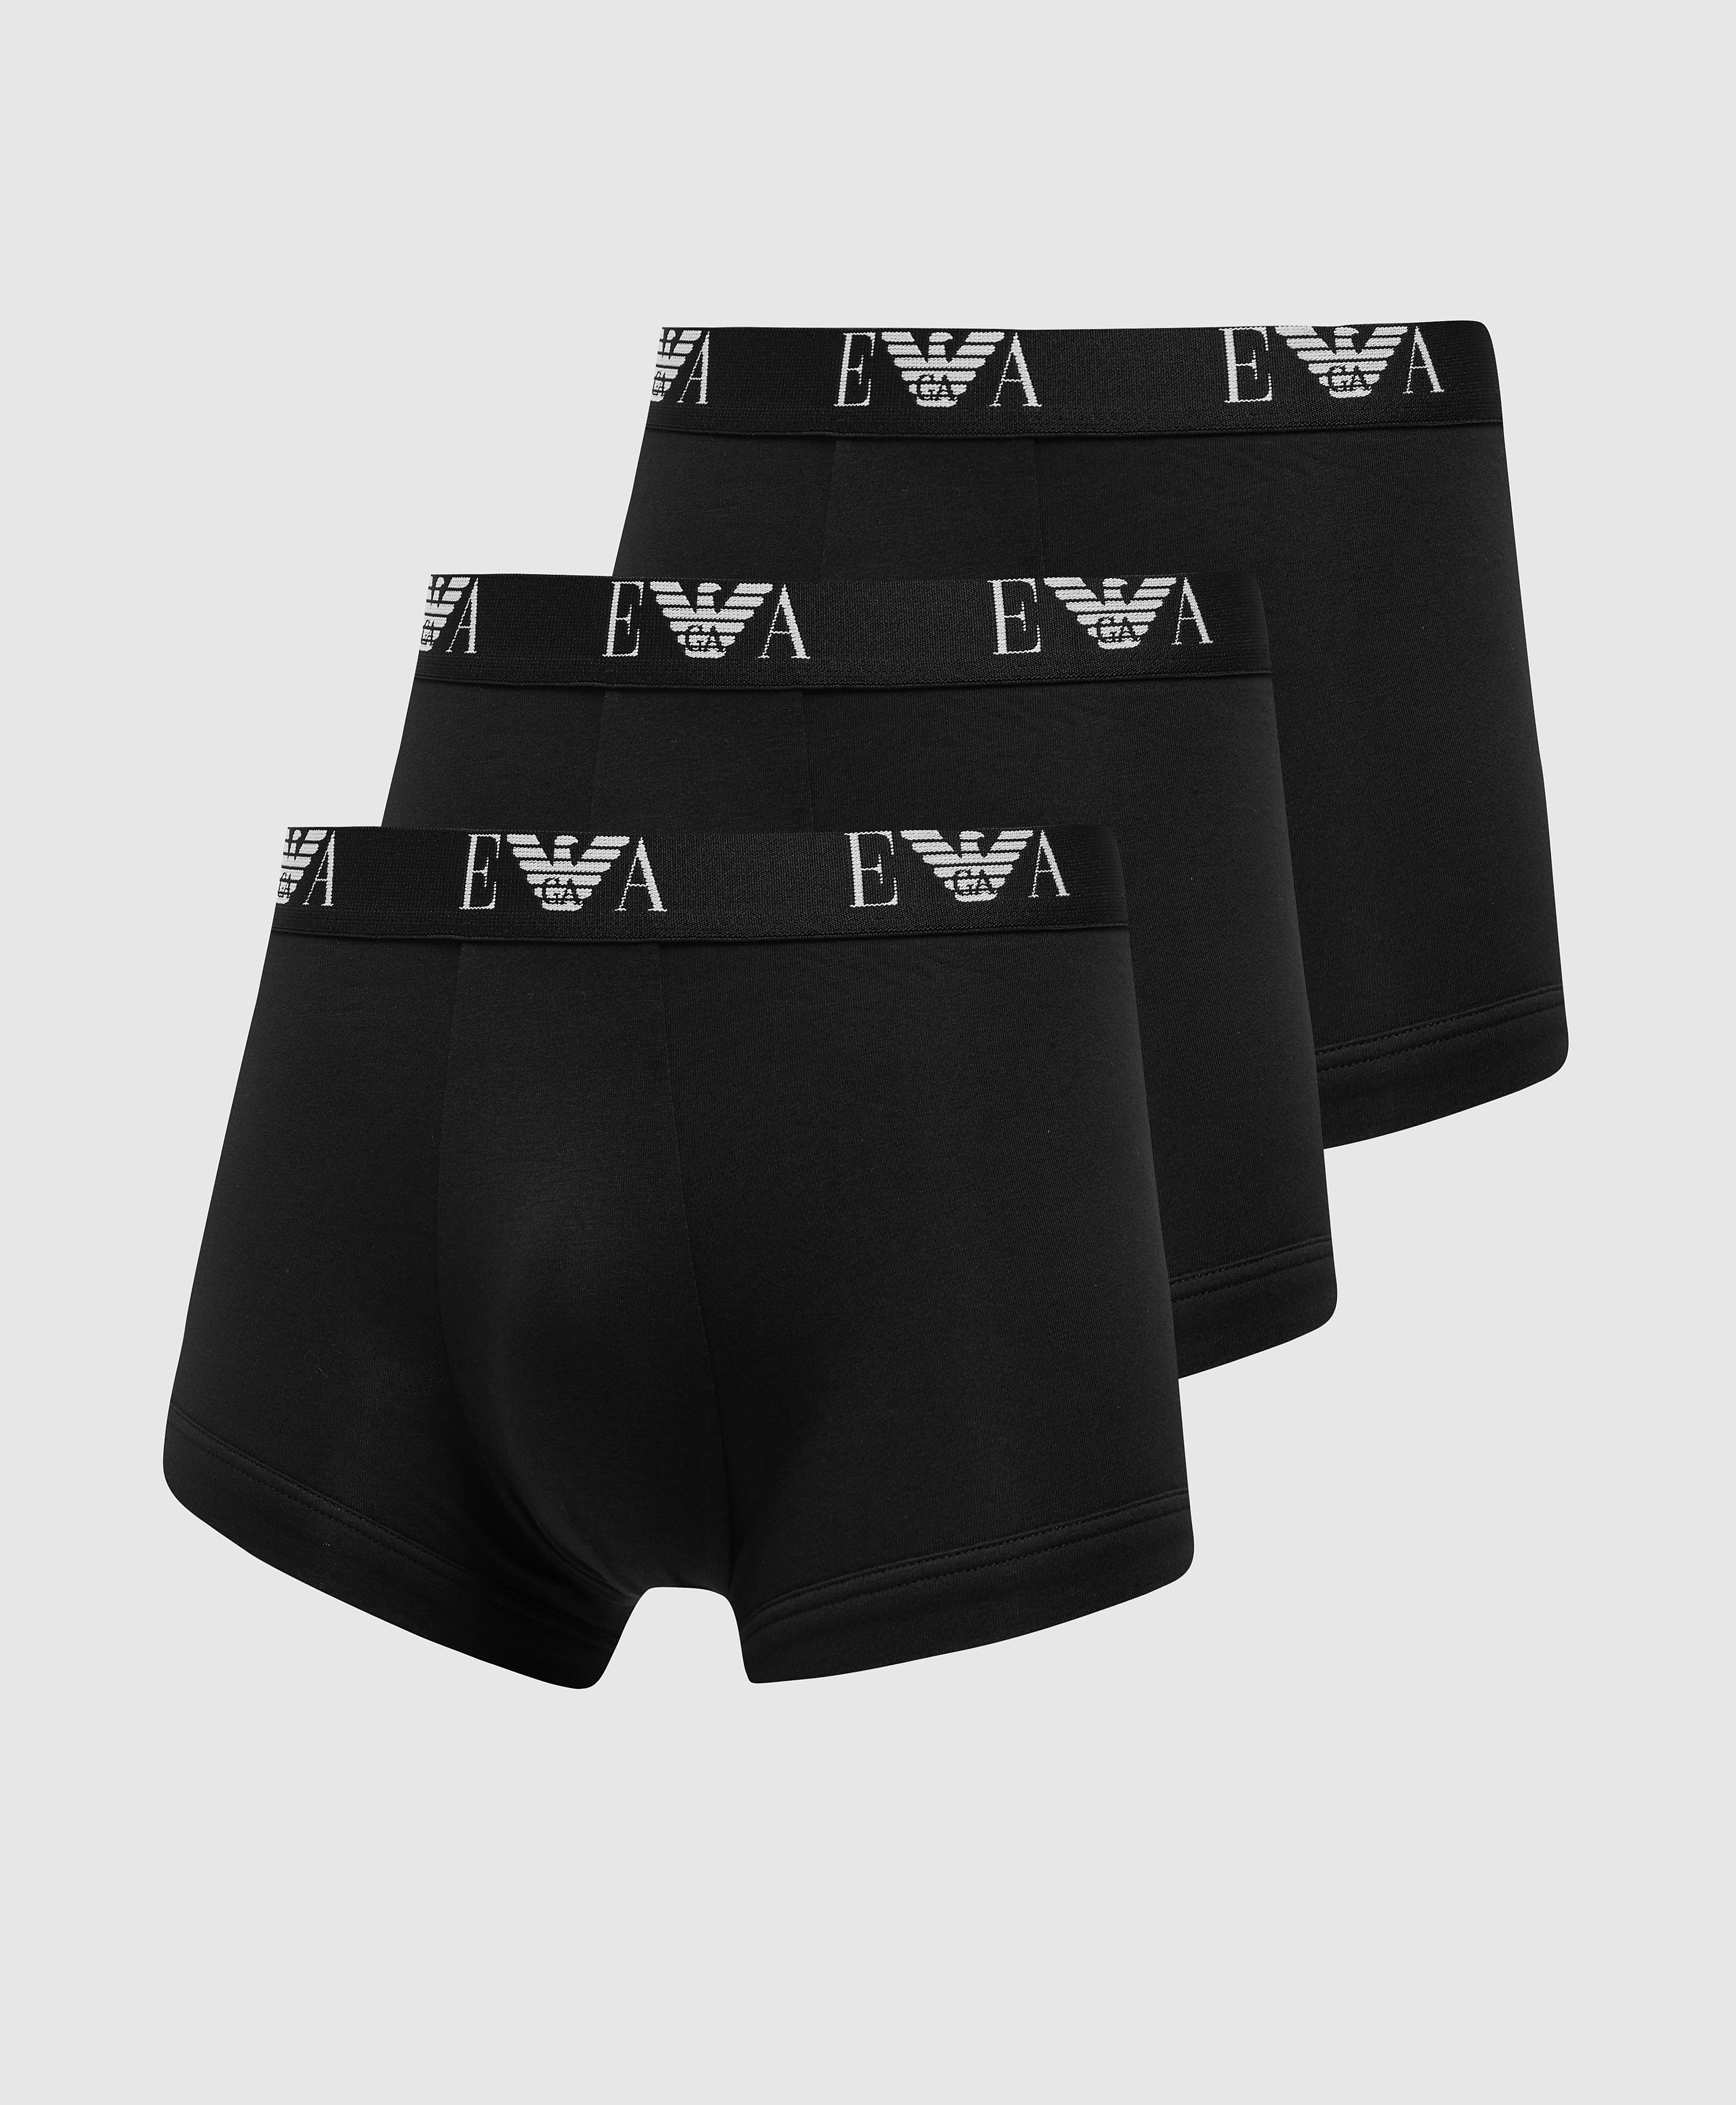 Emporio Armani Loungewear Men's 3 Pack Trunks - Black, Black